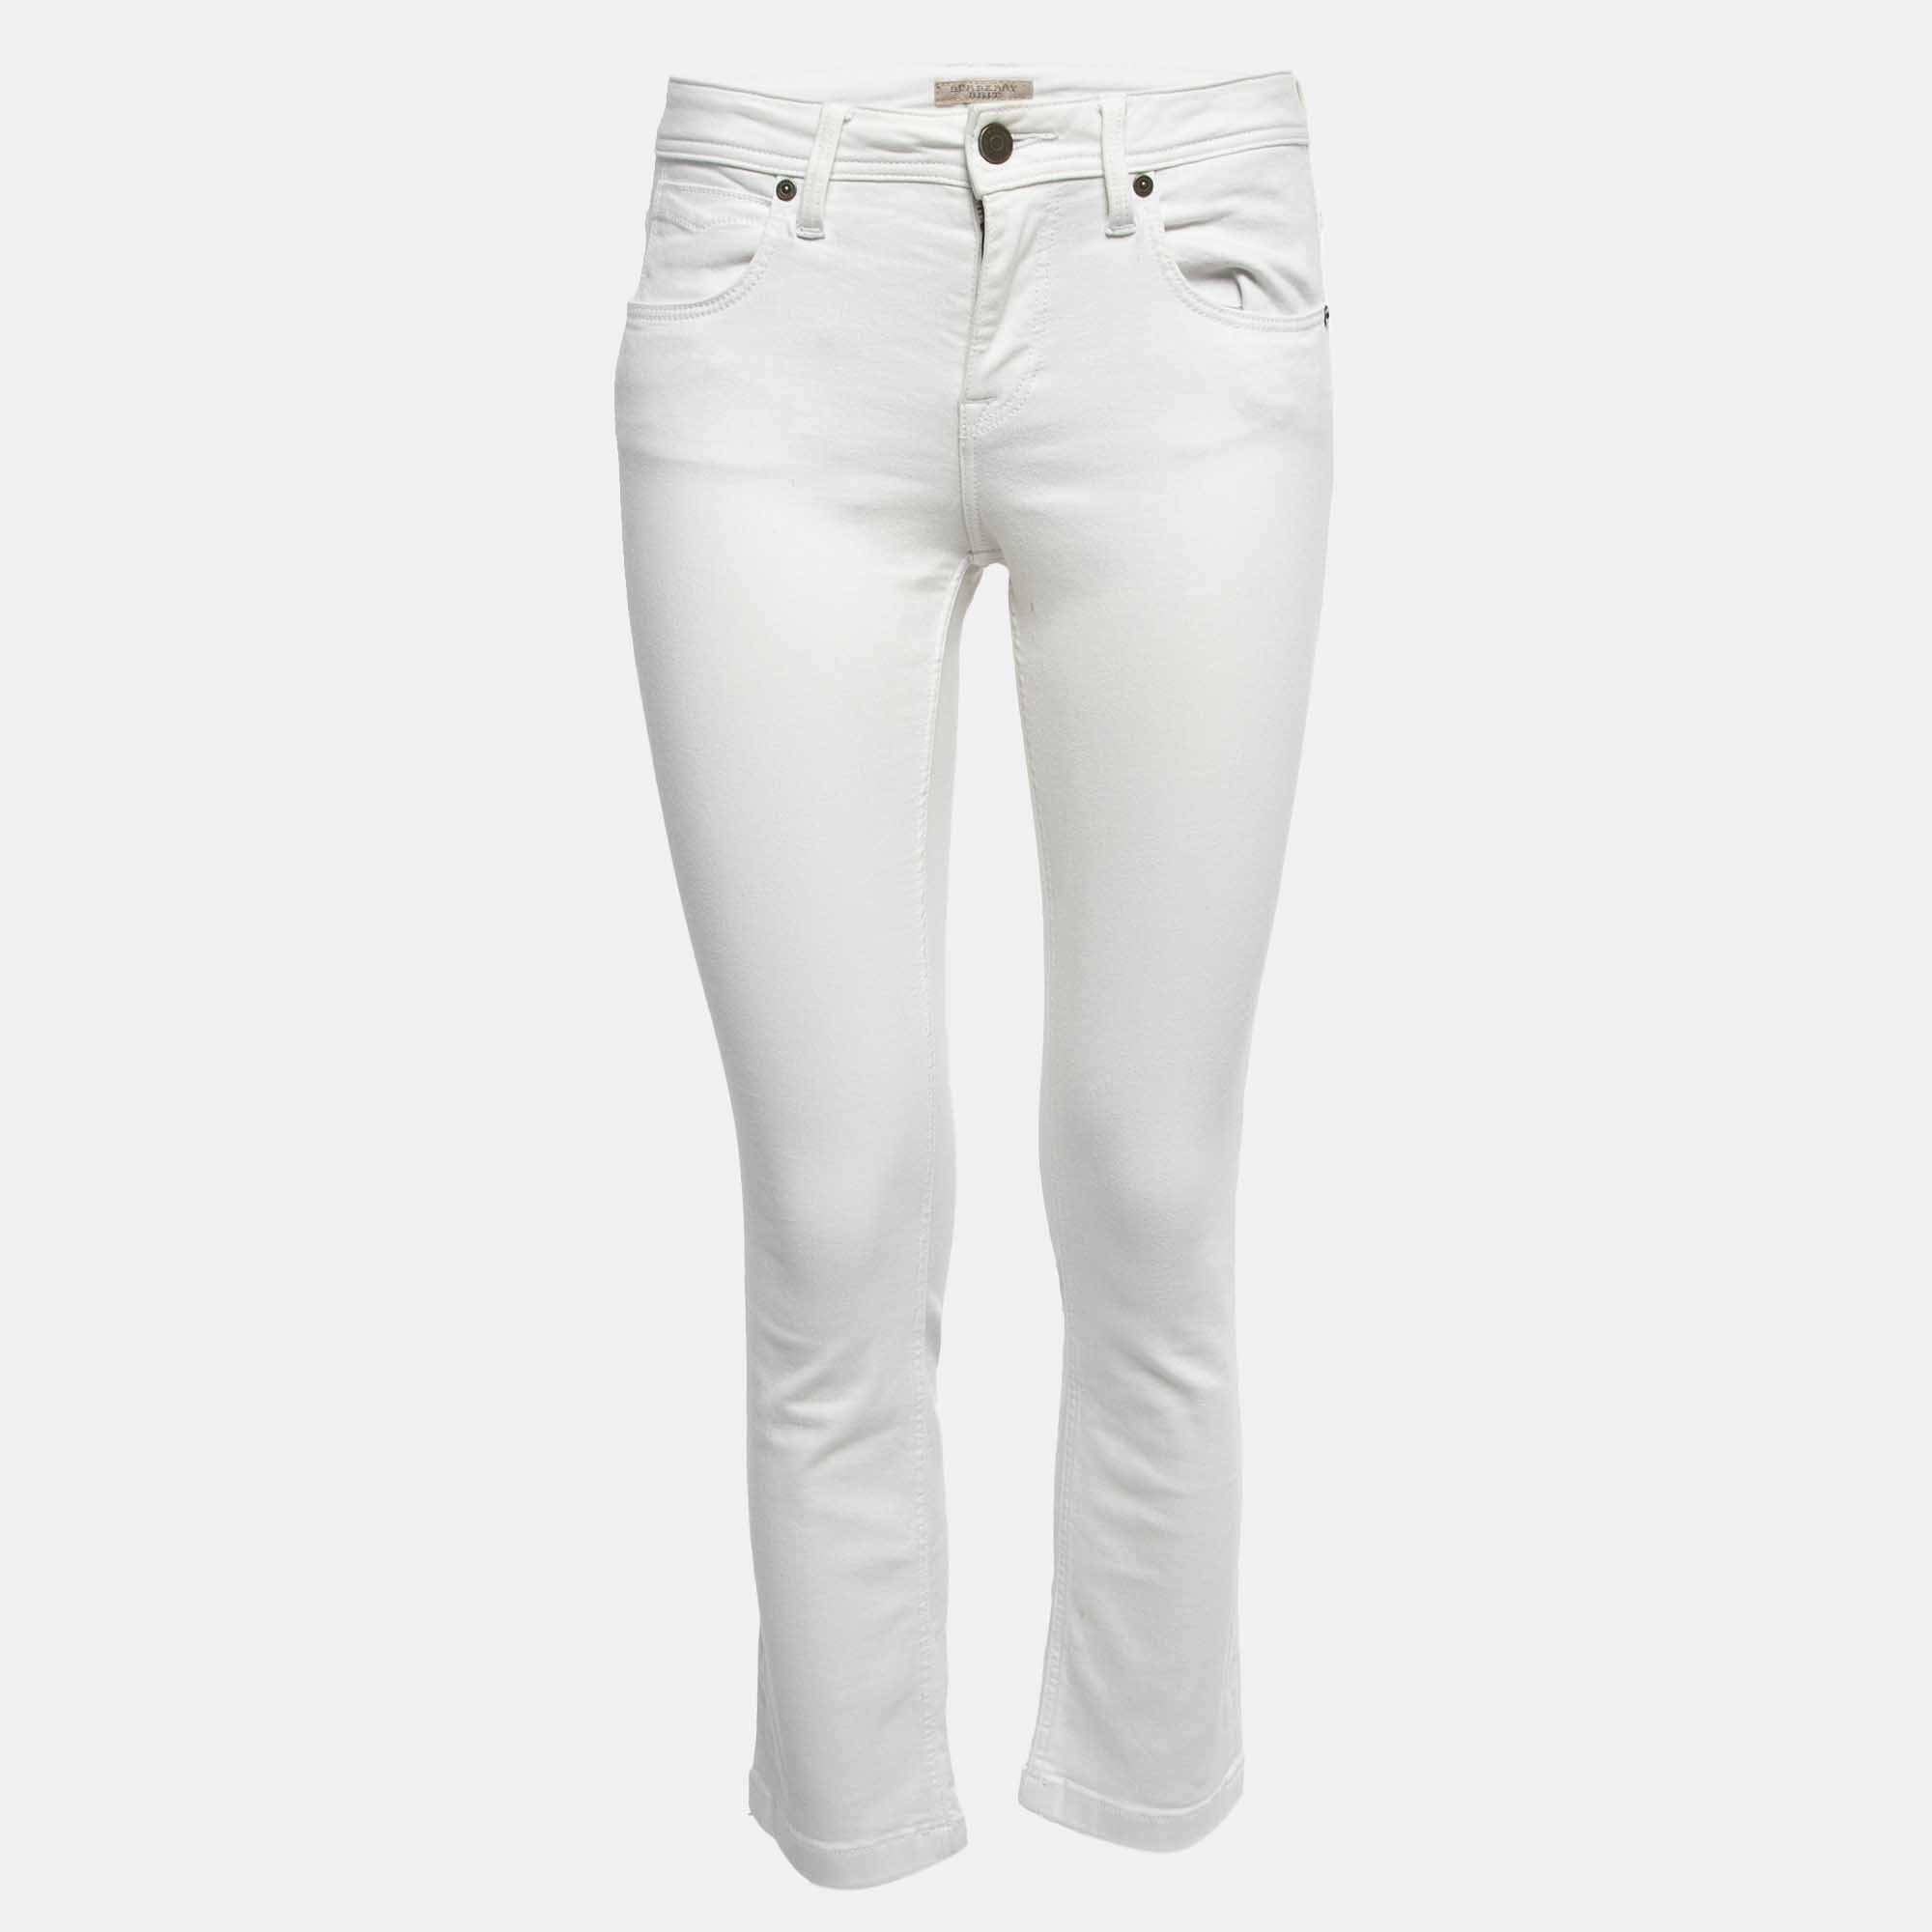 Pre-owned Burberry White Denim Alperton Cropped Jeans S Waist 27"